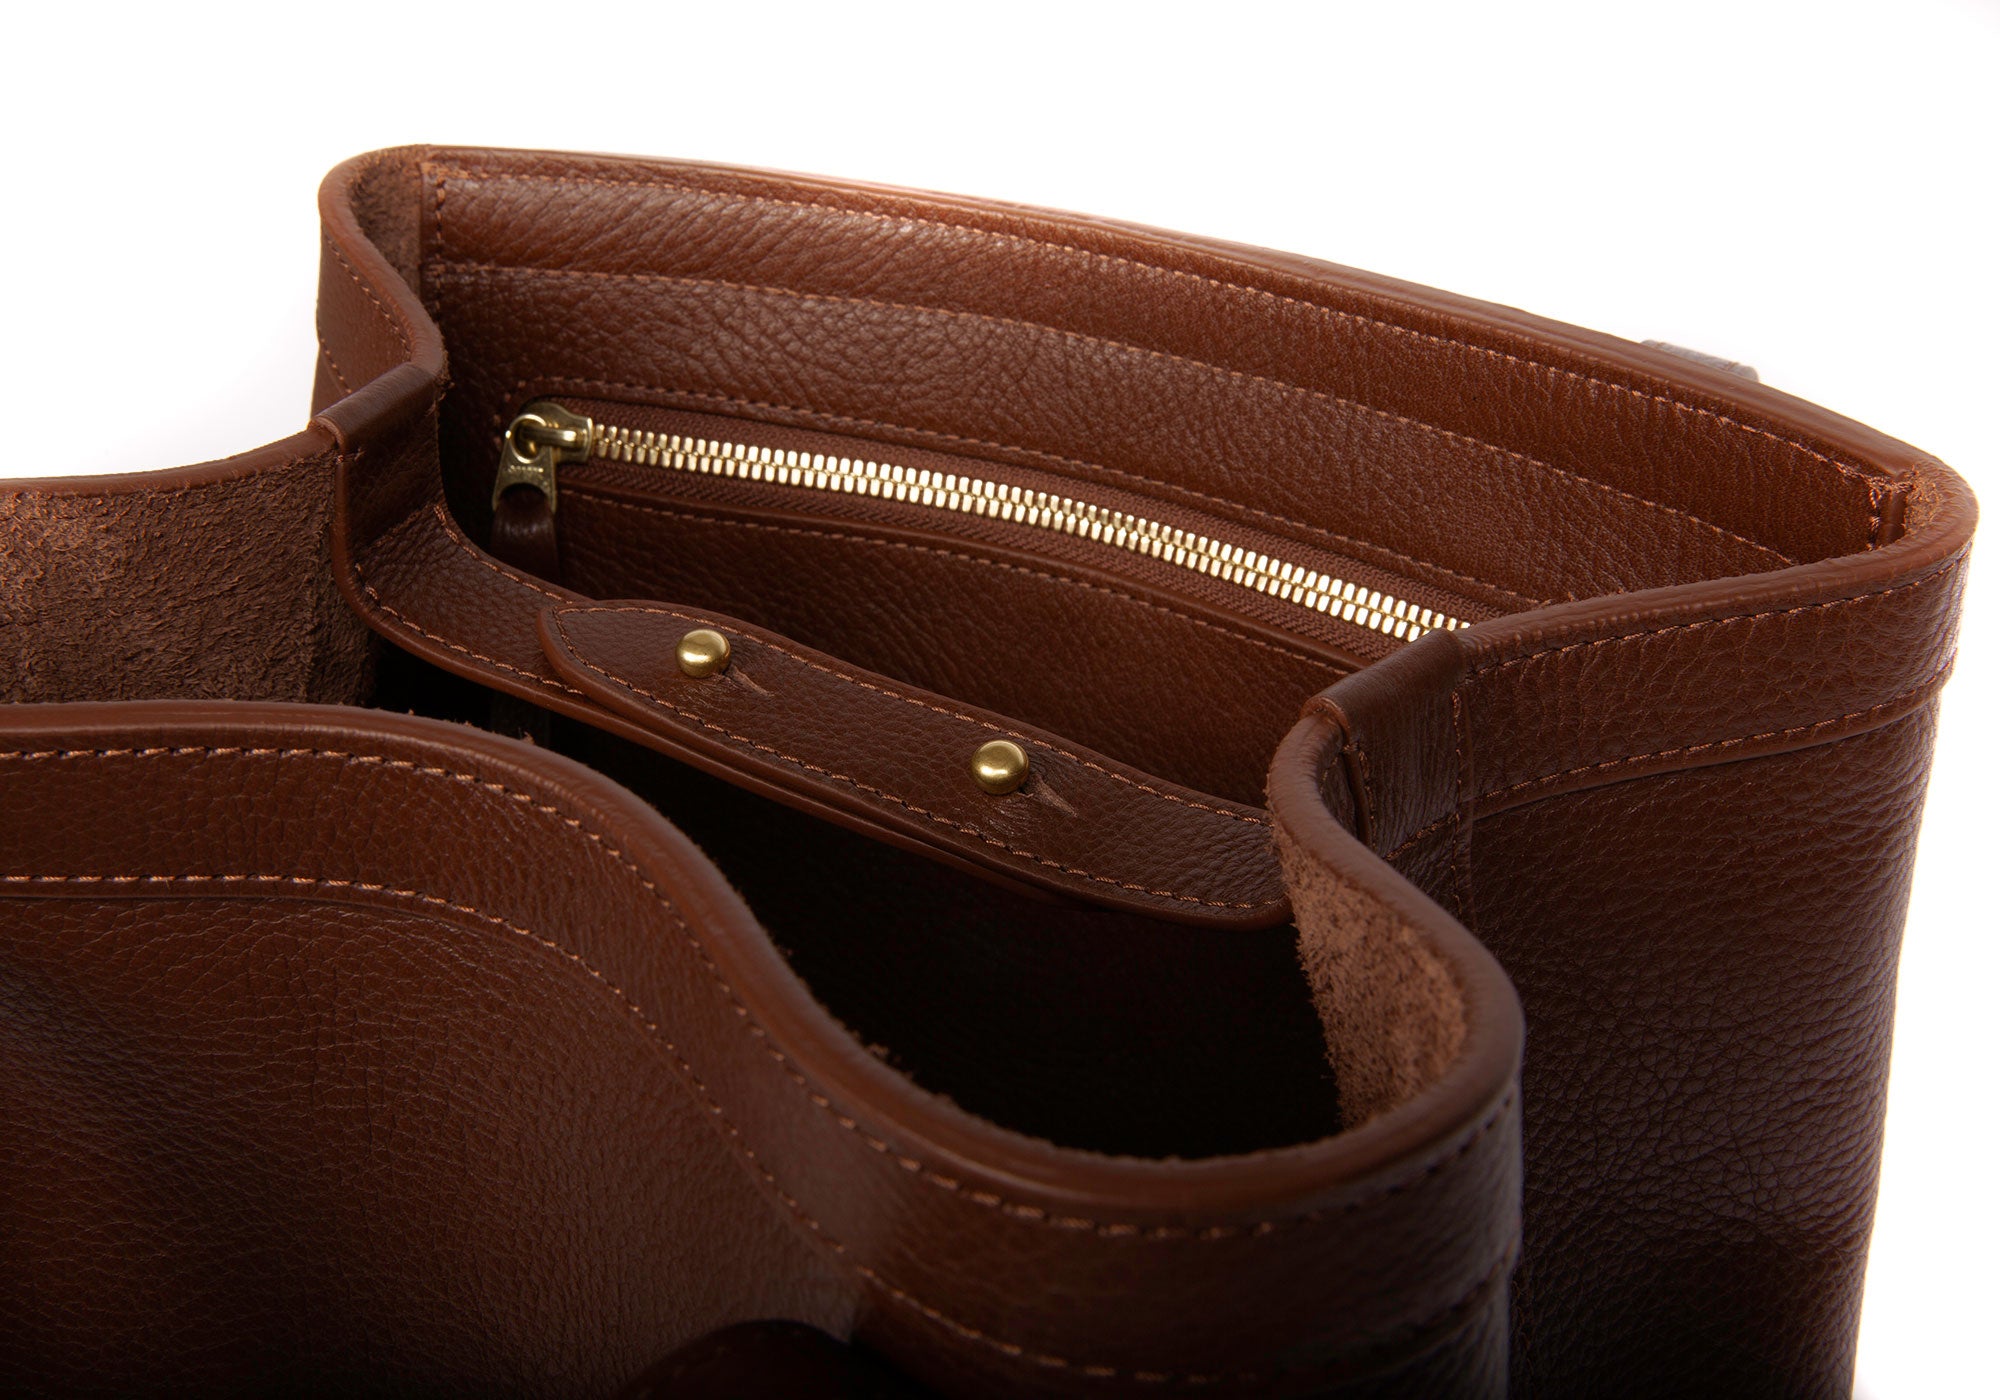 Angle Tote - Handmade Leather Tote Bags